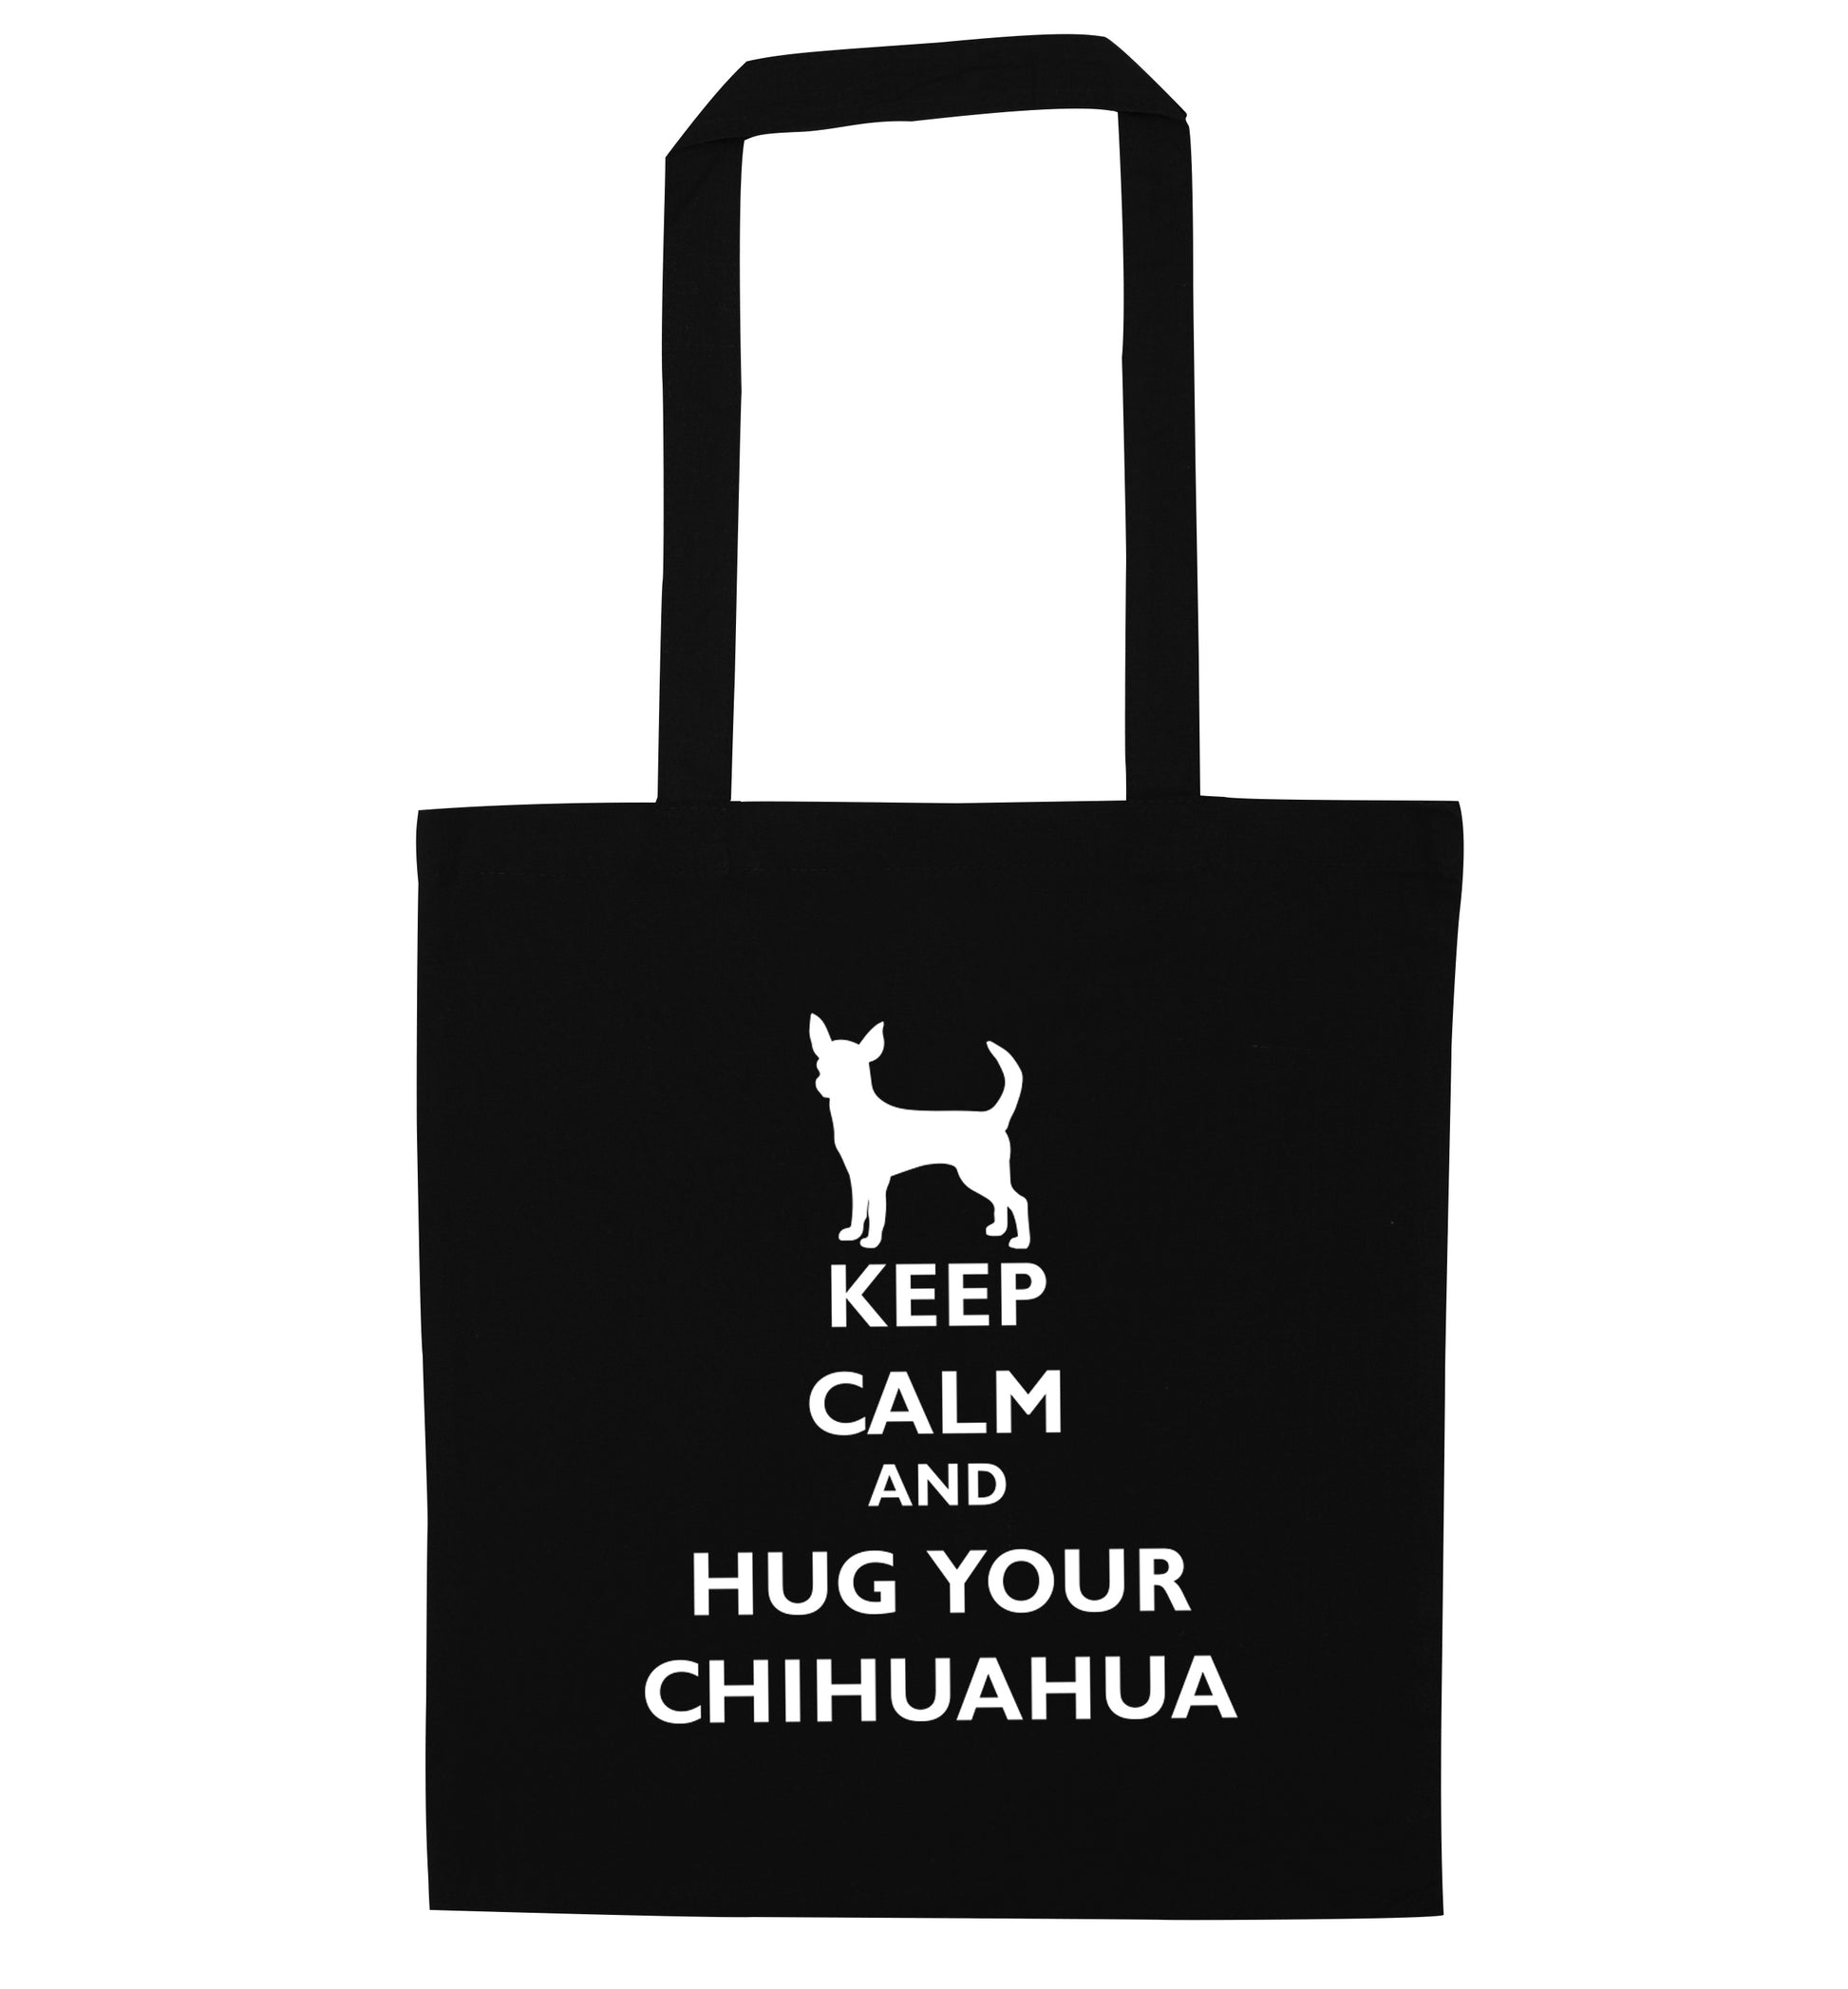 Keep calm and hug your chihuahua black tote bag